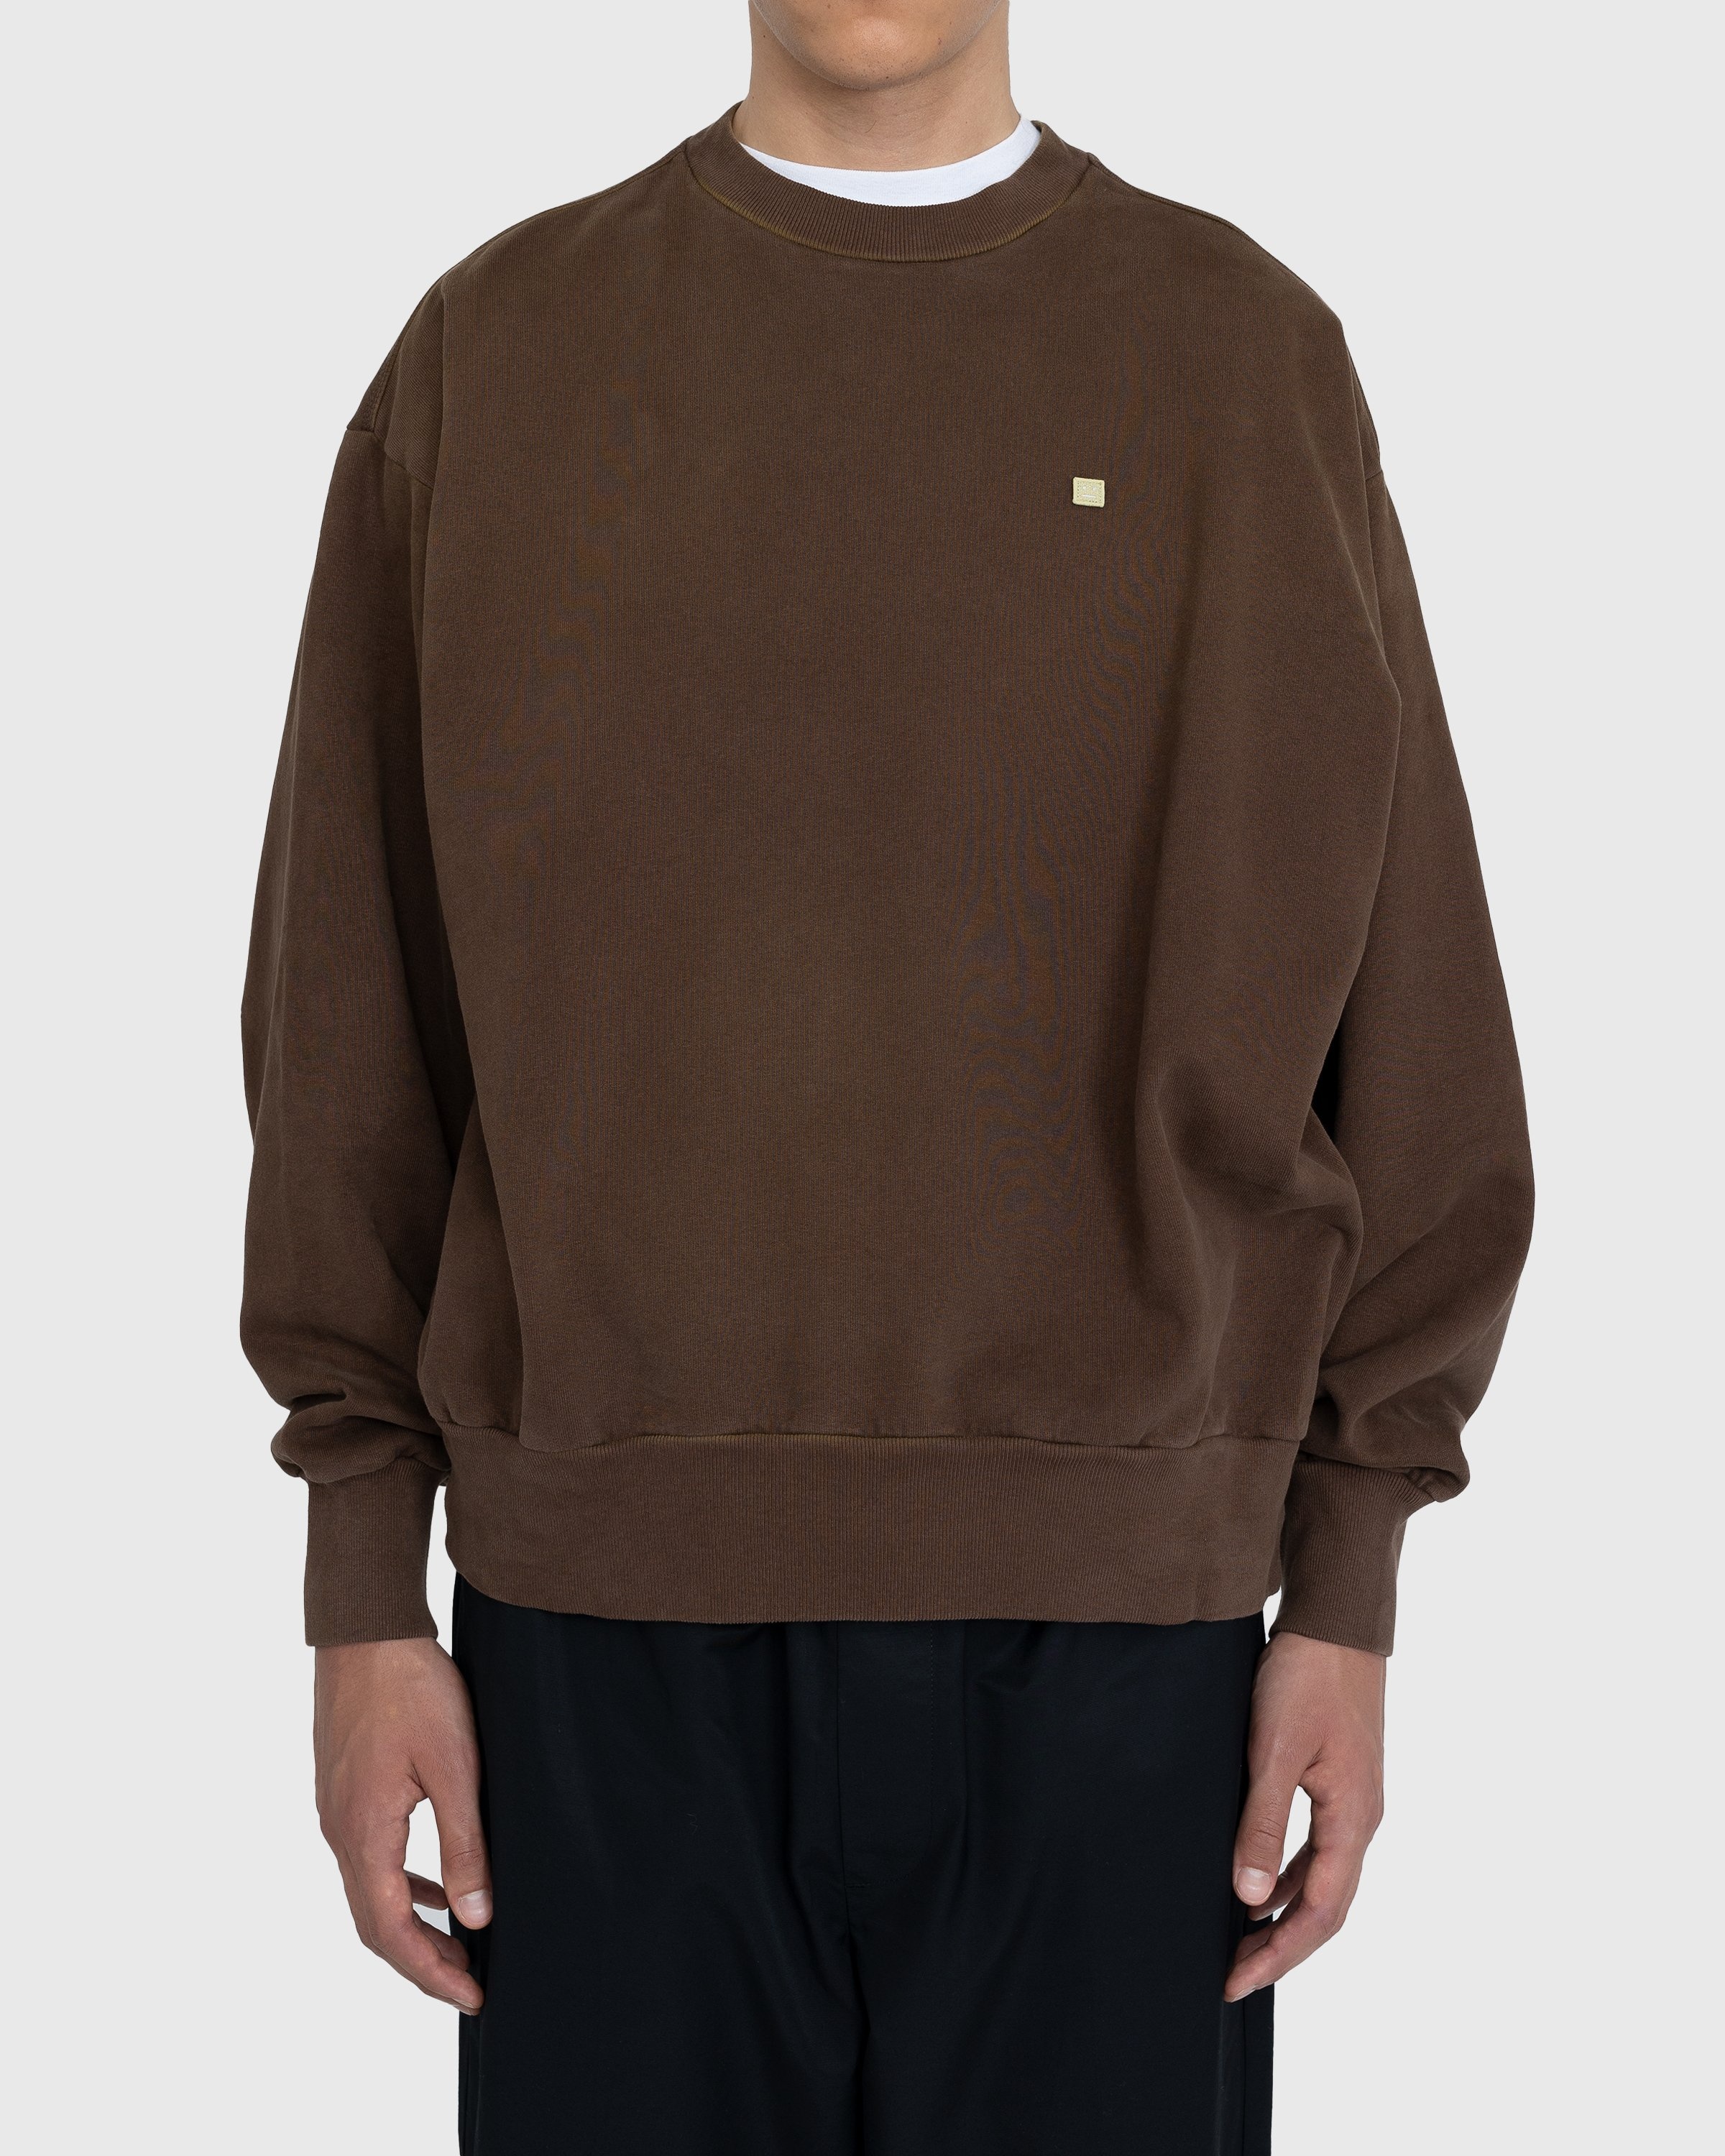 Acne Studios – Organic Cotton Crewneck Sweatshirt Coffee Brown - Sweatshirts - Brown - Image 2